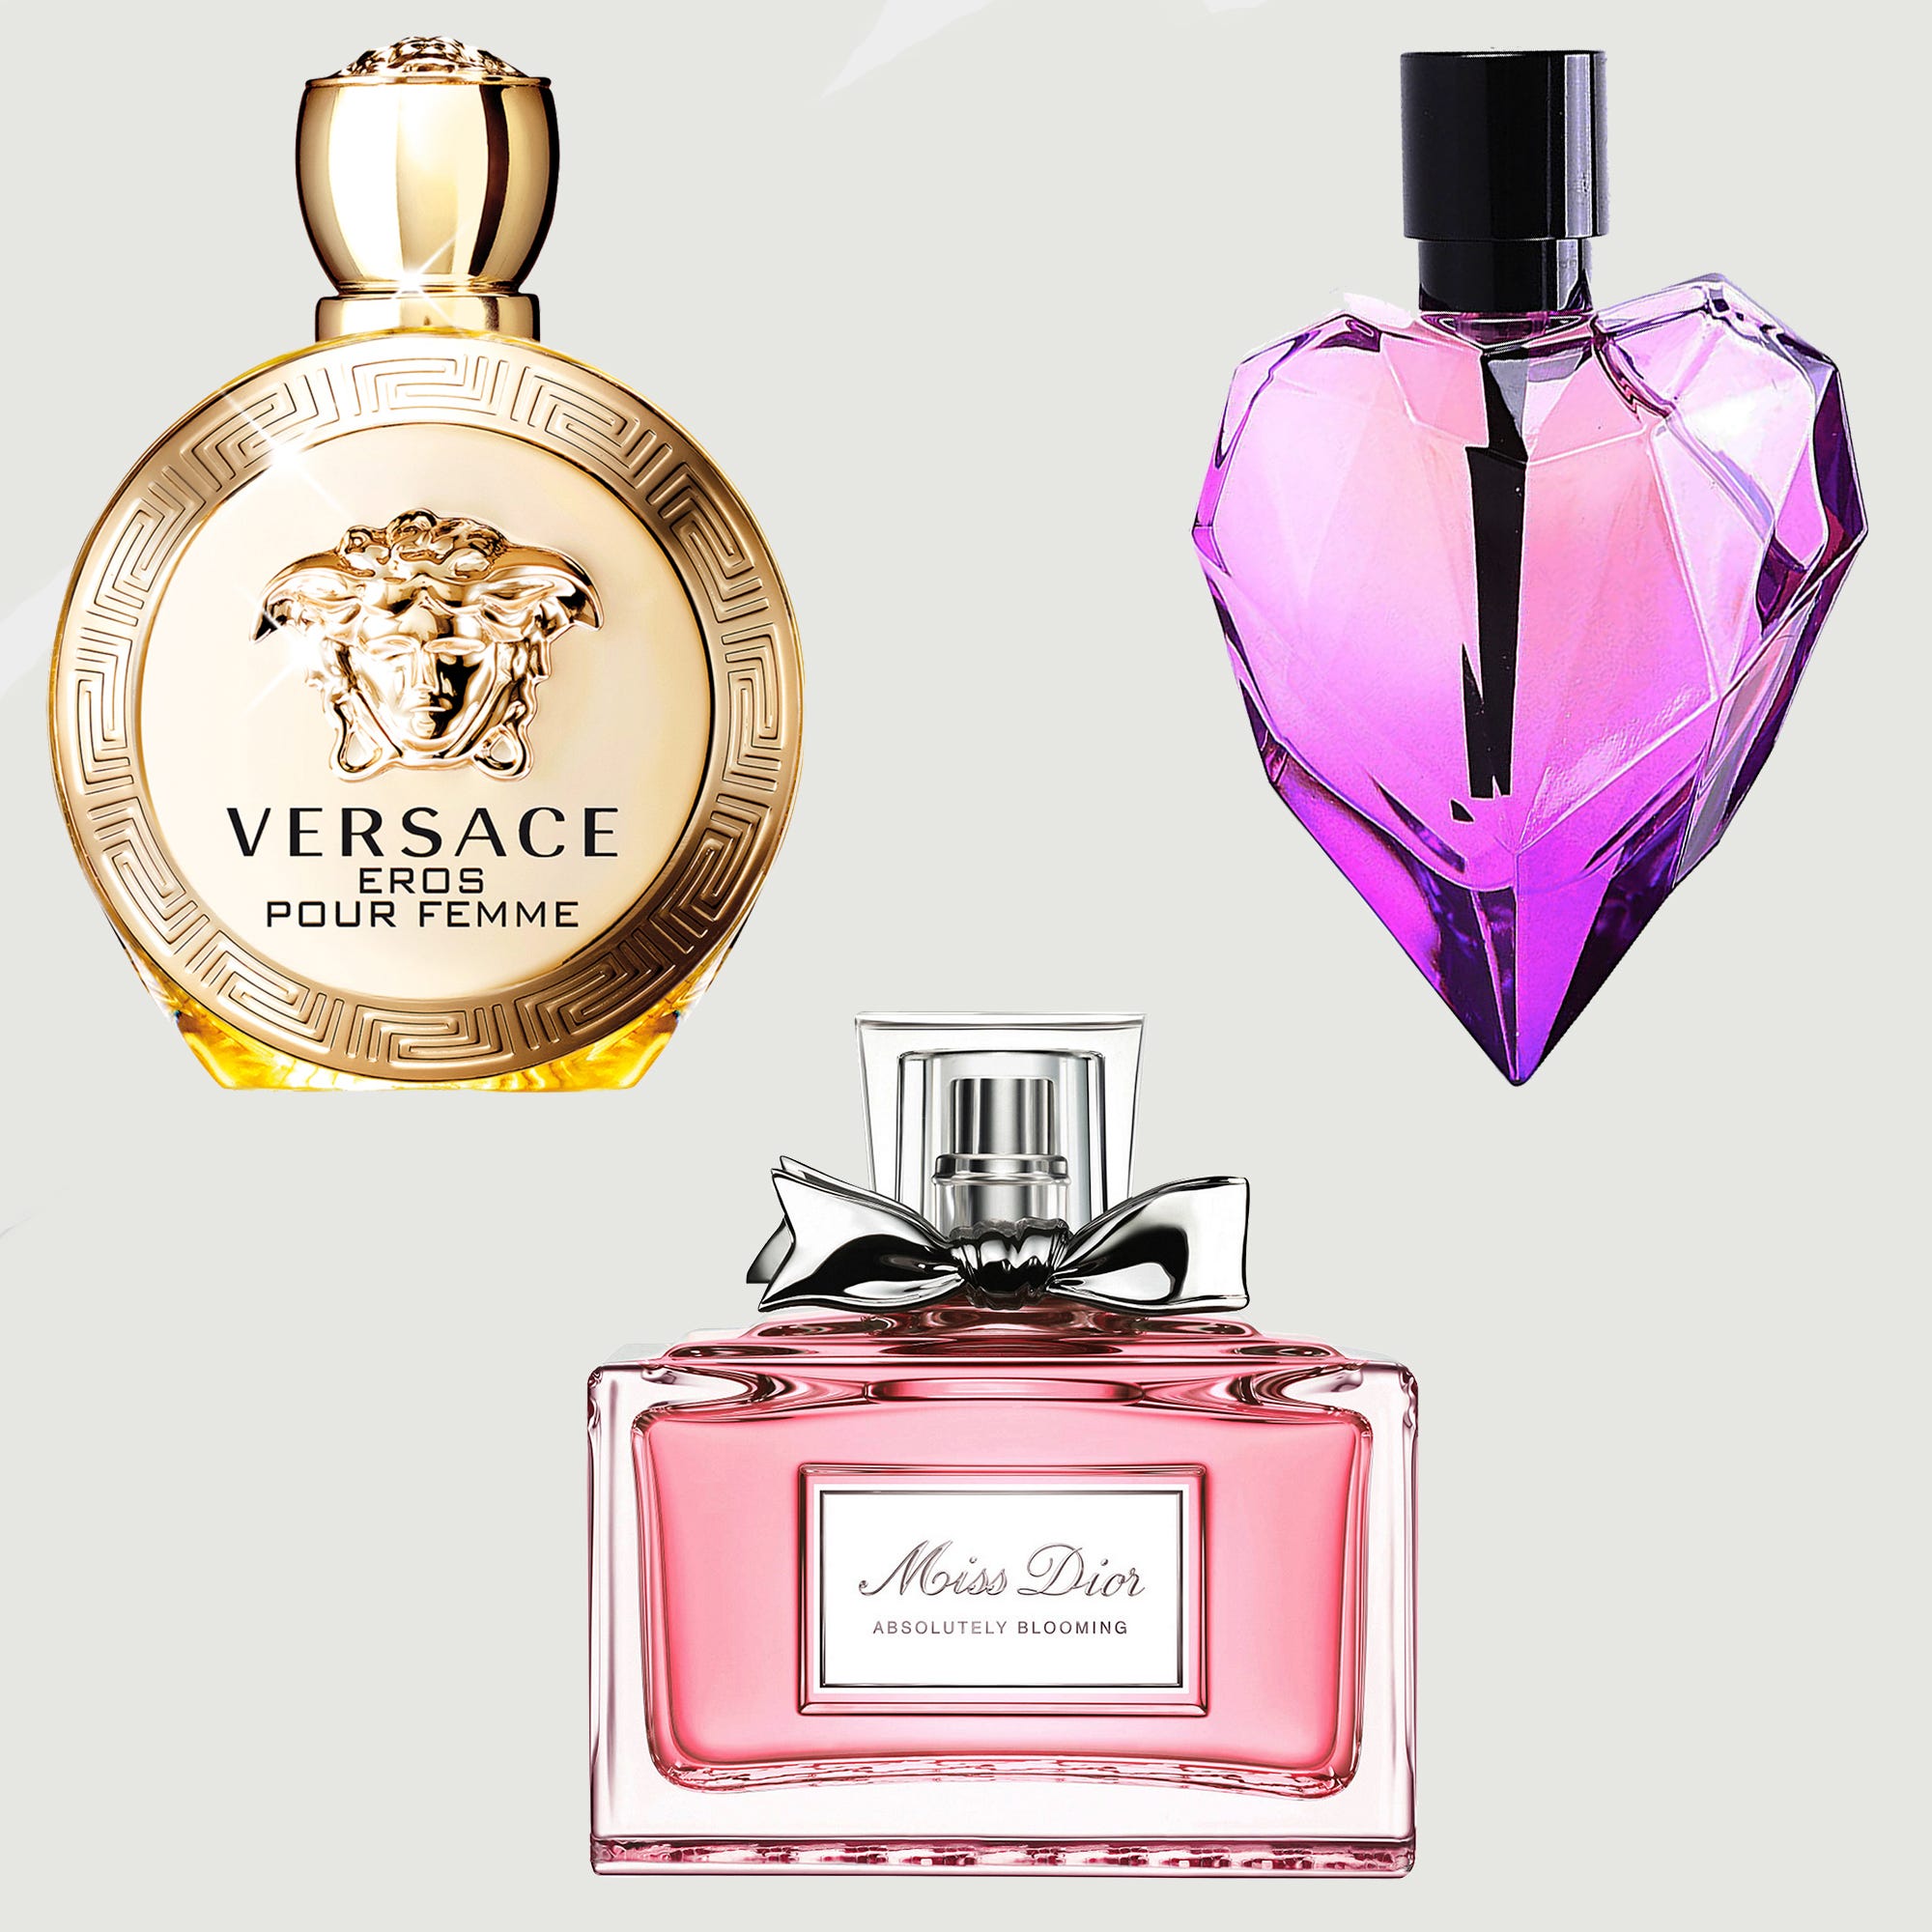 versace new perfume 2019